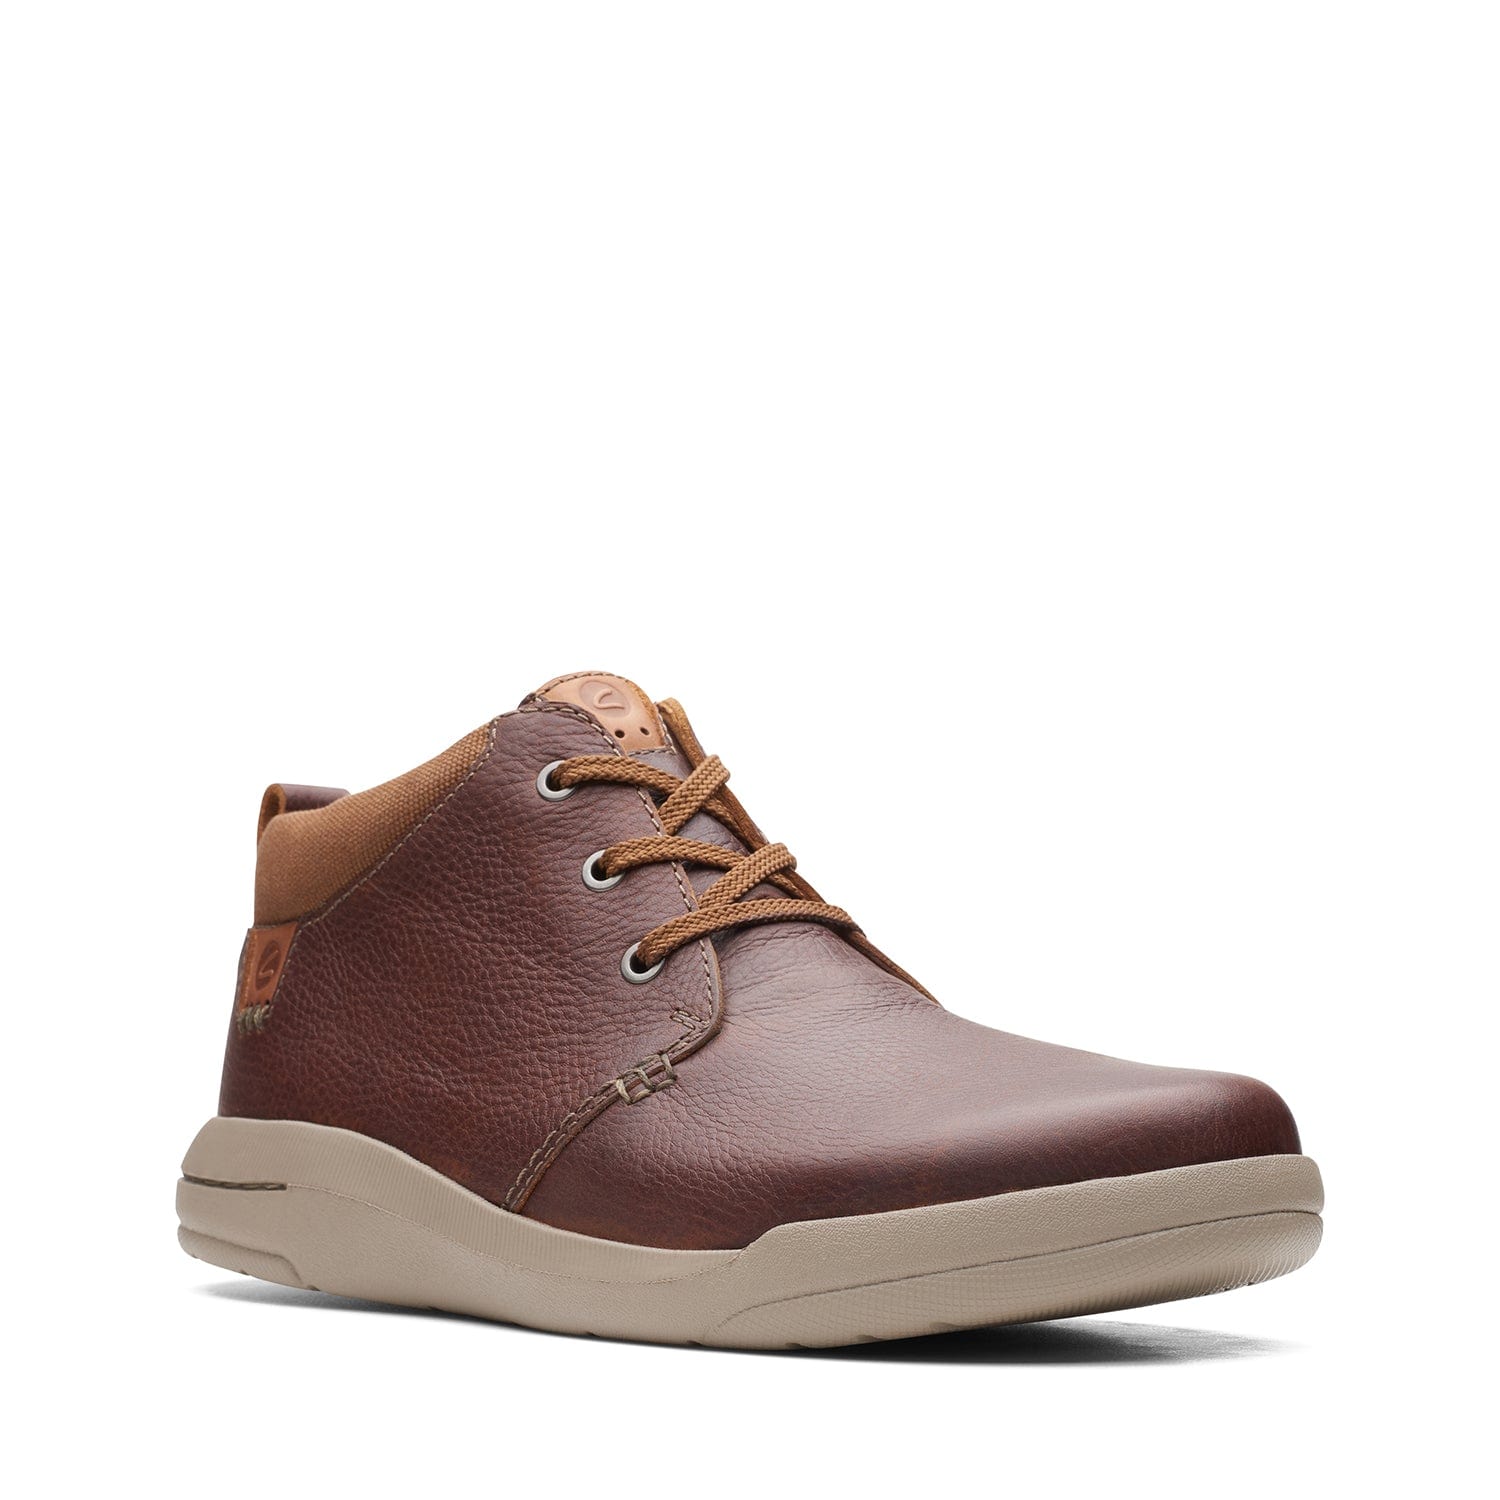 Clarks Driftway Mid Boots - Dark Tan Leather - 261629667 - G Width (Standard Fit)